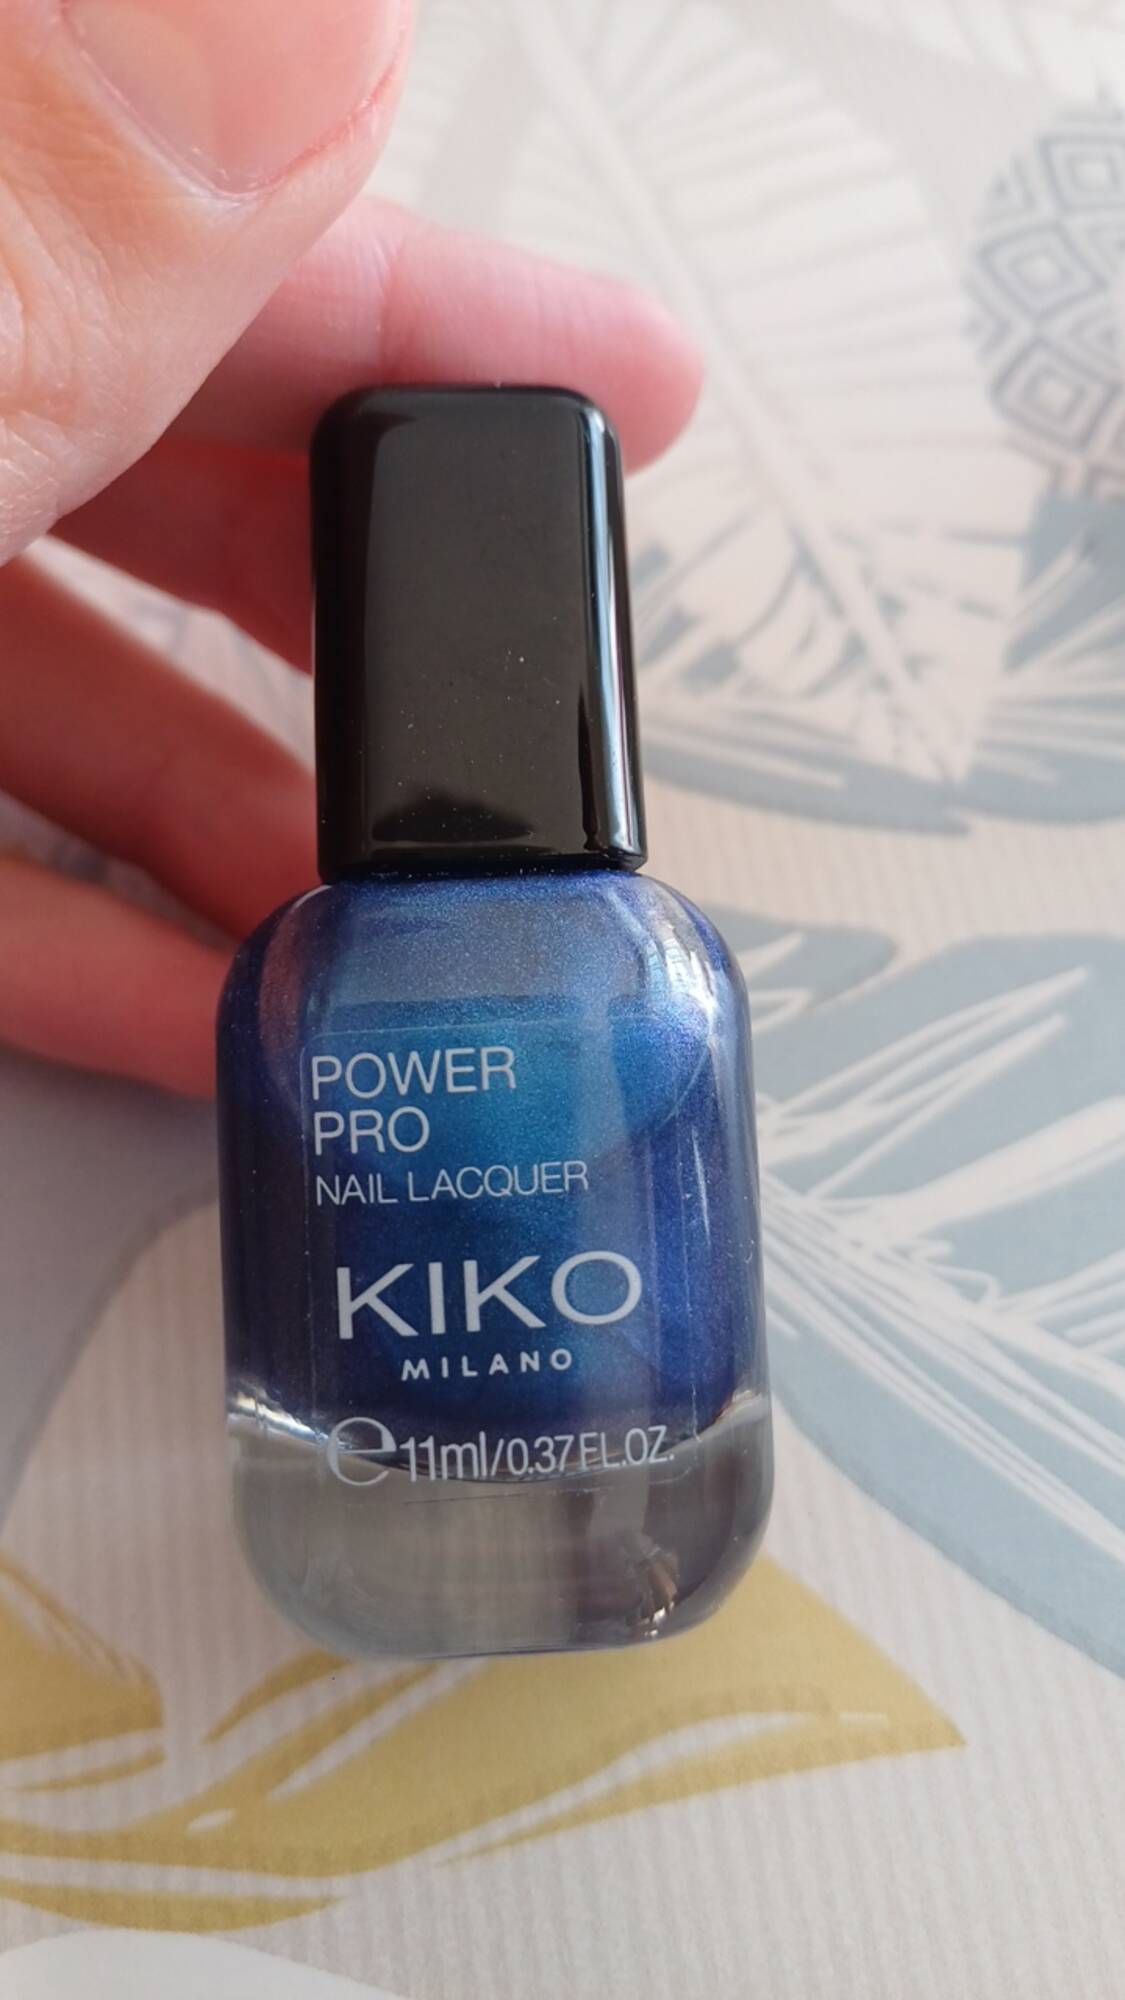 KIKO MILANO - Power pro nail lacquer 